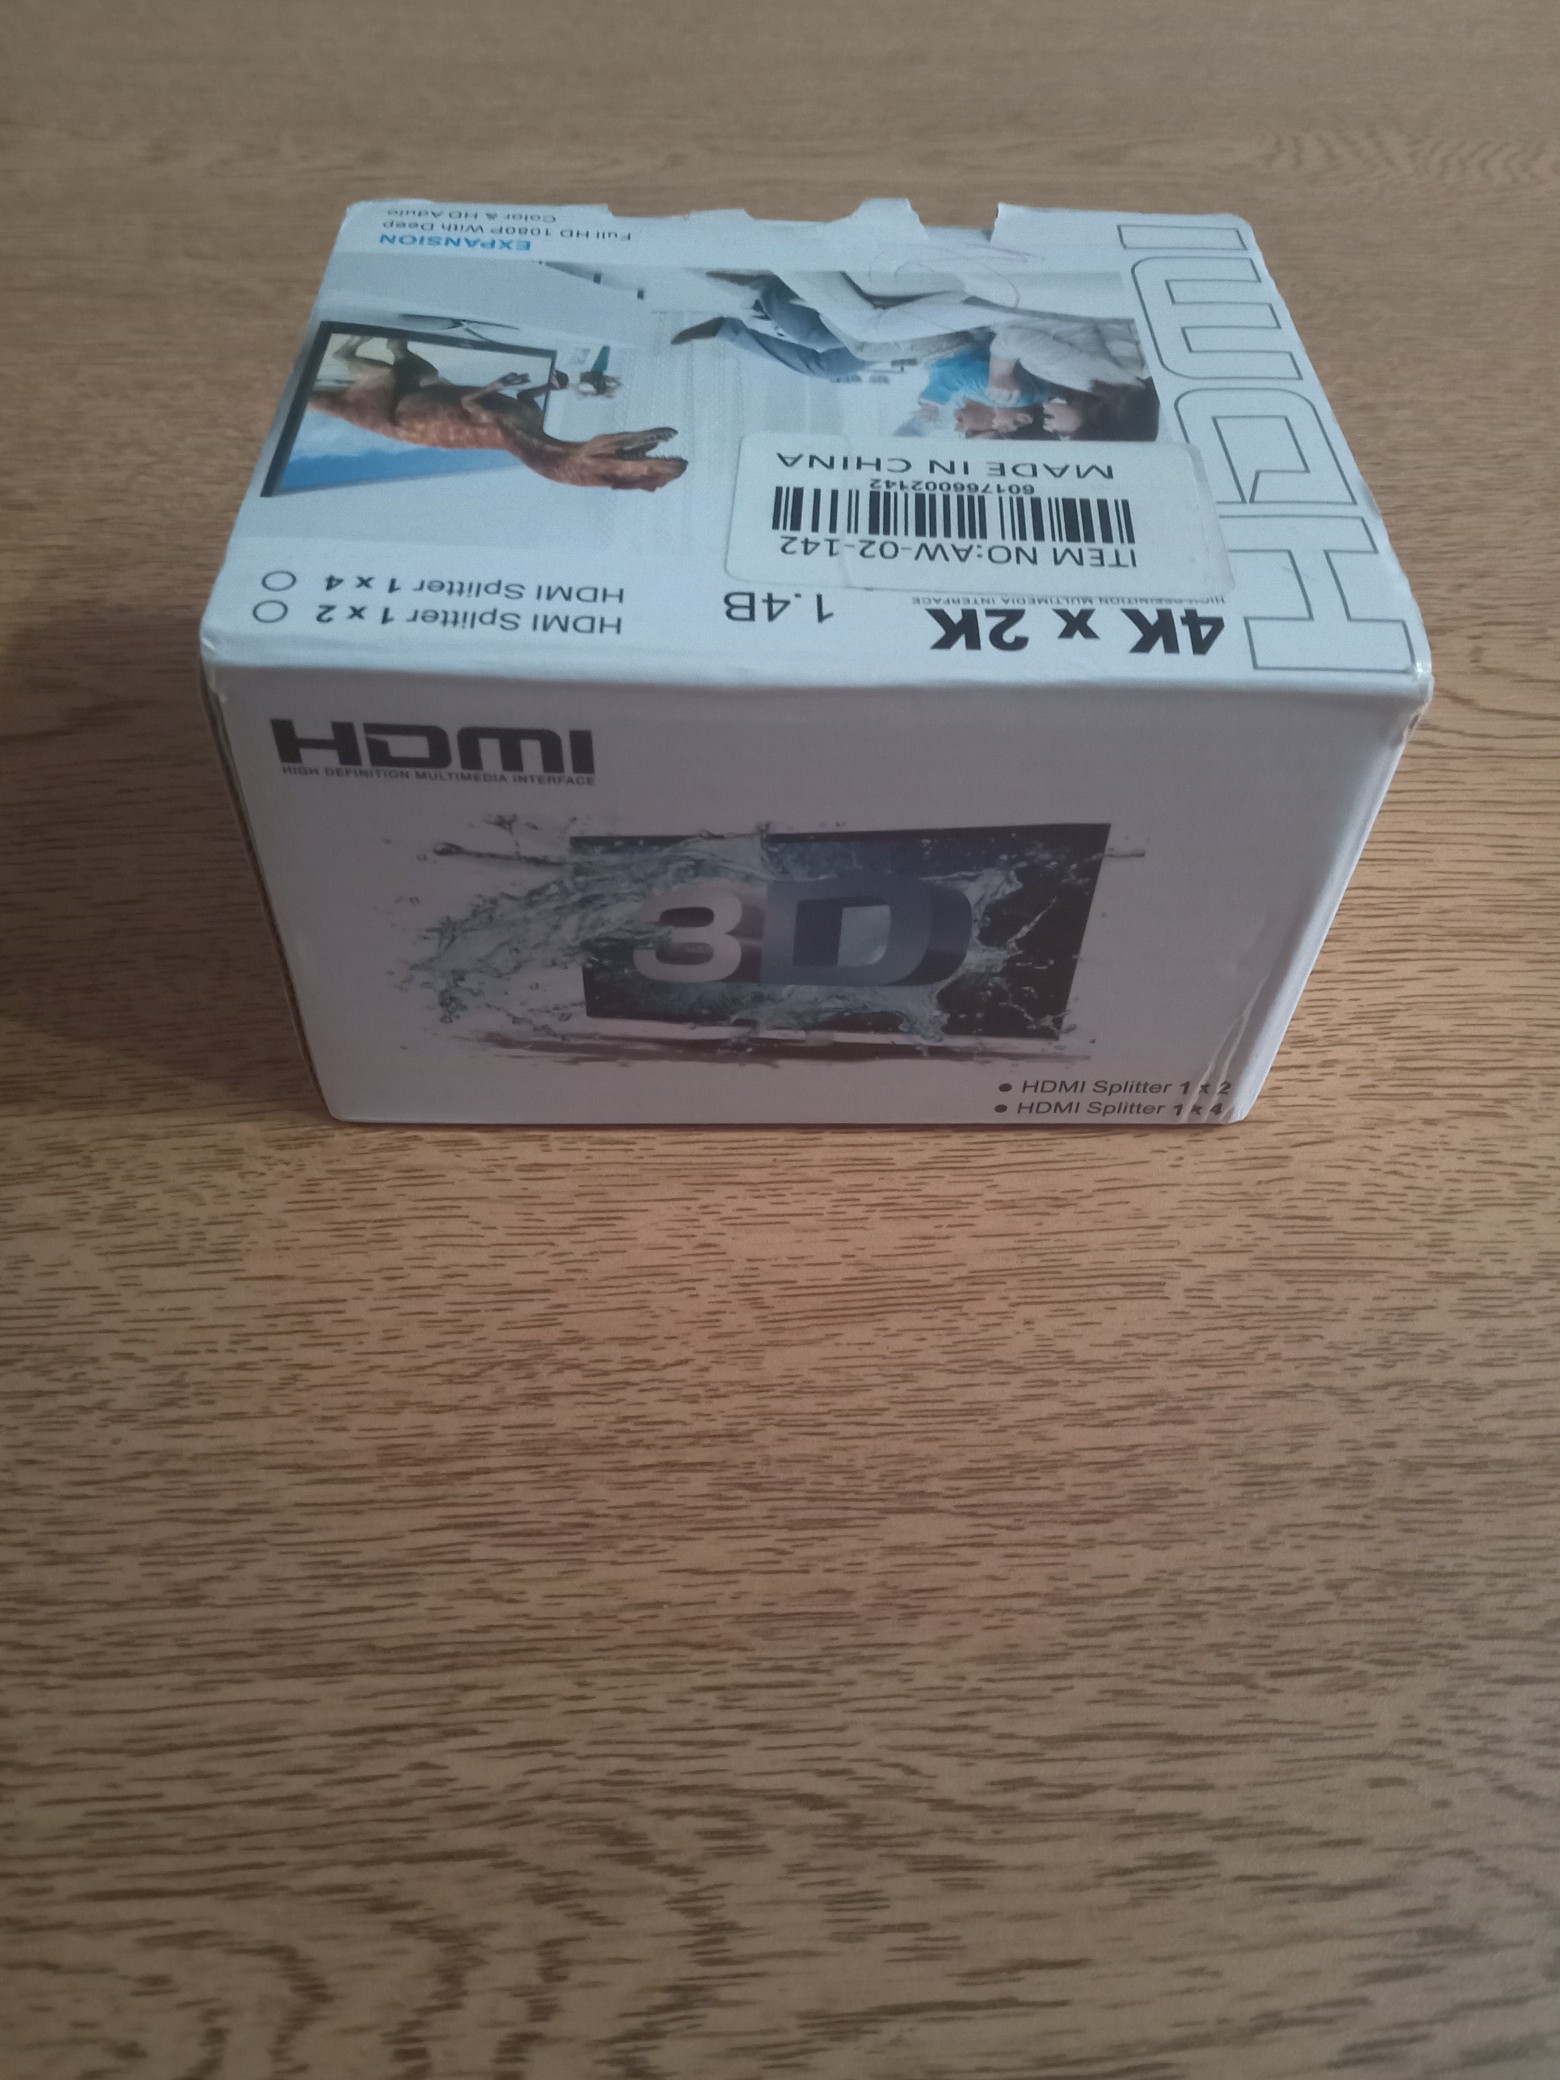 tv - Splitter HDMI Interfaz multimedia de alta definición HD 4k

1X4 0